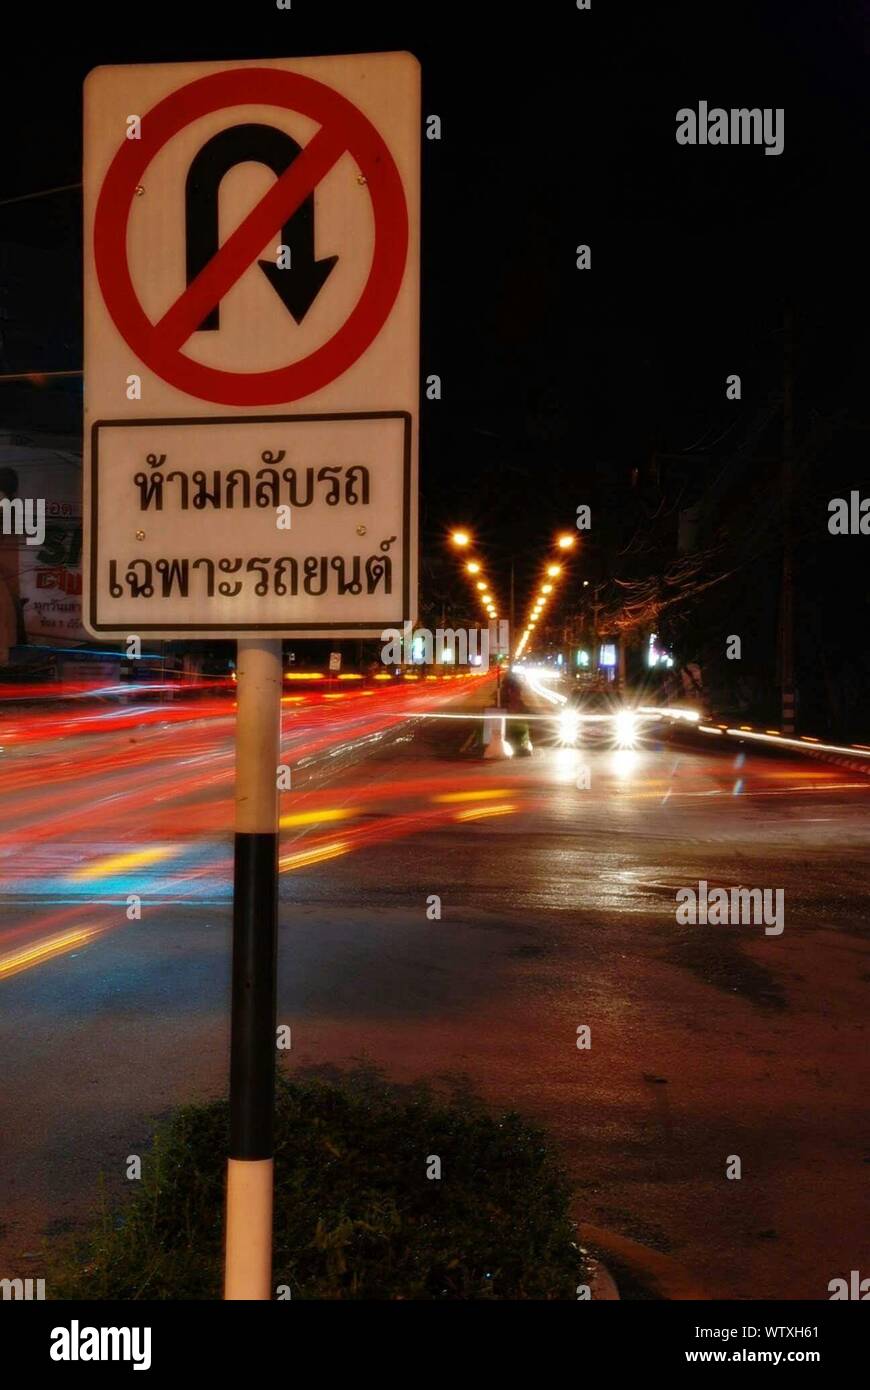 No Right Turn Sign At Night Stock Photo